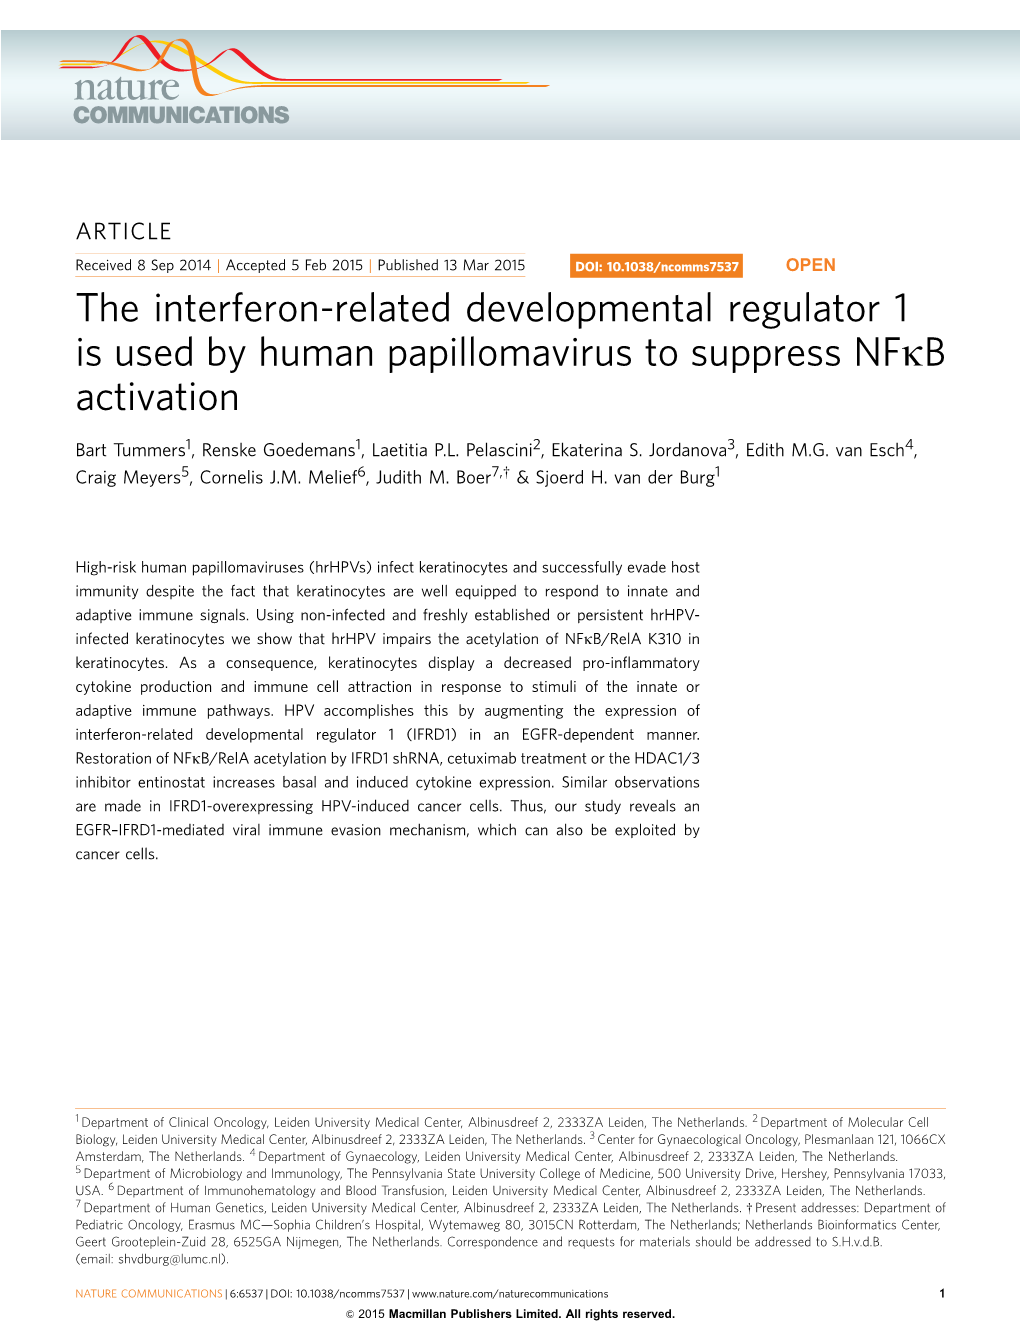 The Interferon-Related Developmental Regulator 1 Is Used by Human Papillomavirus to Suppress Nfkb Activation